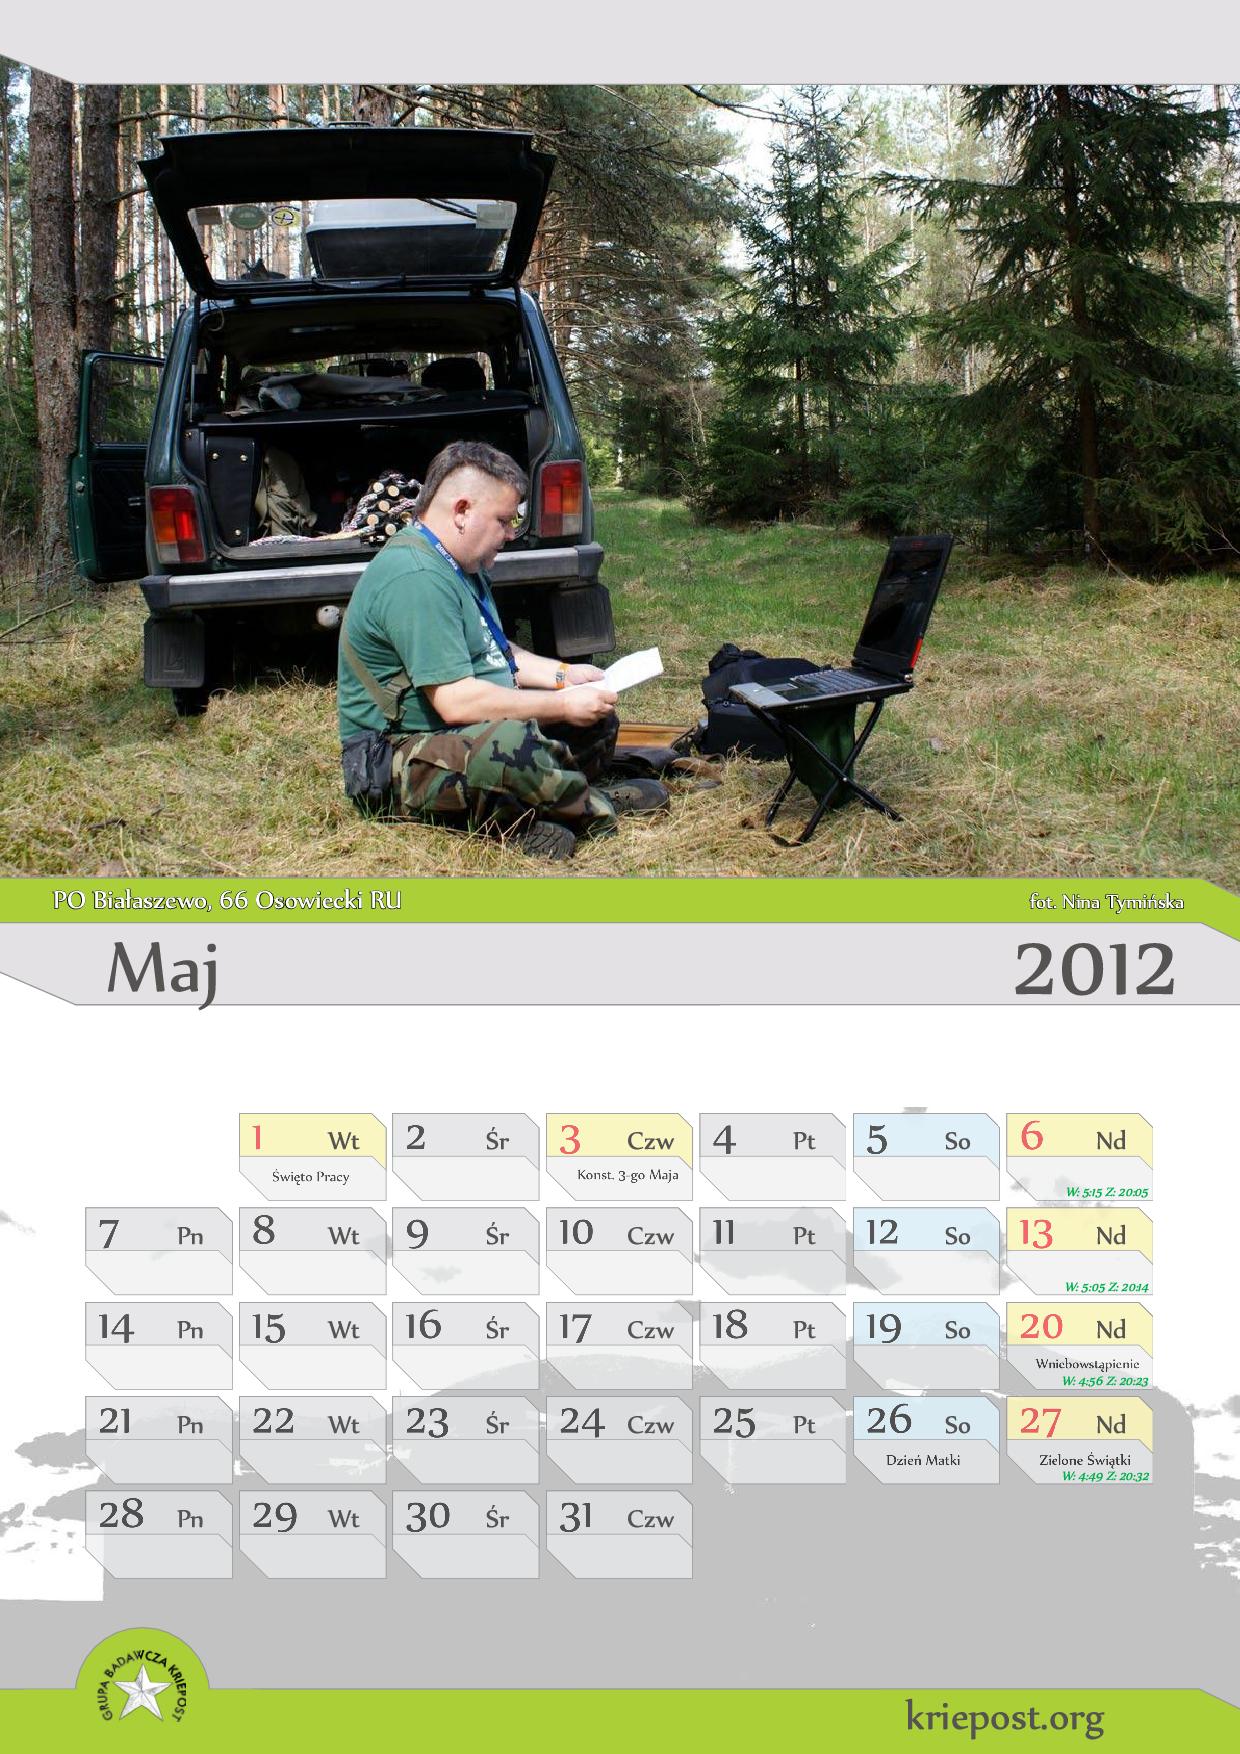 GB Kriepost kalendarz 2012 maj